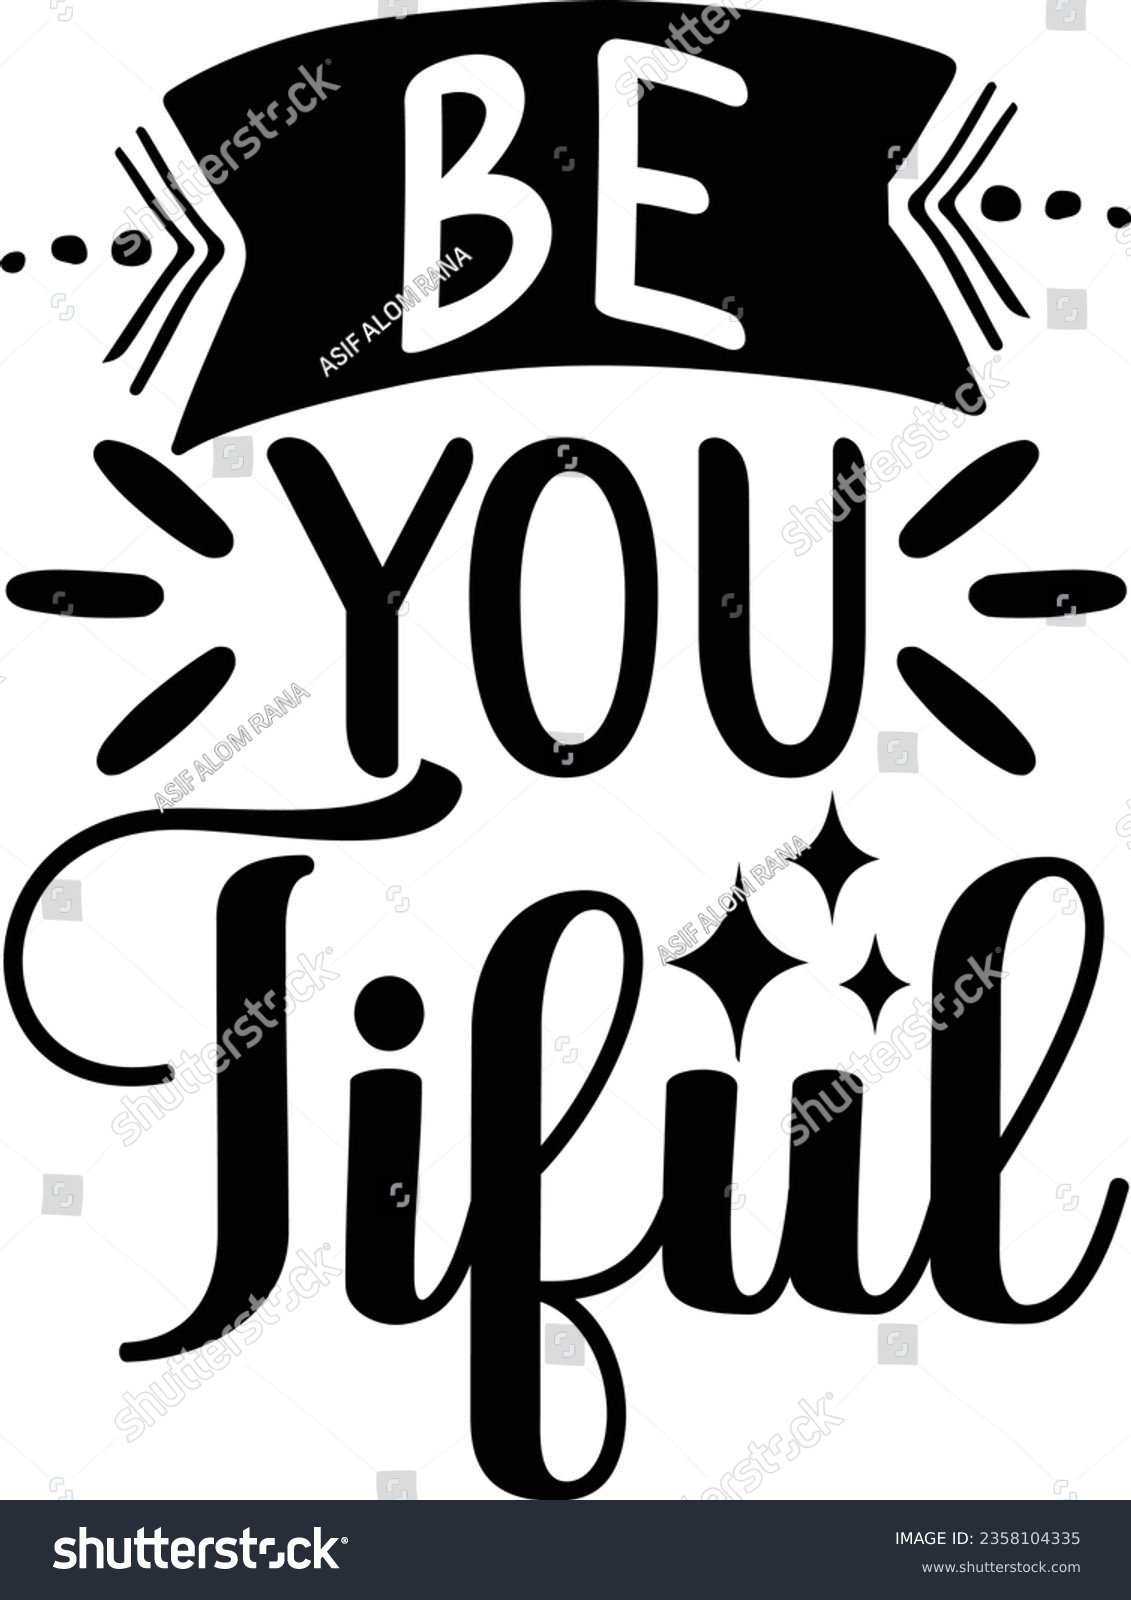 SVG of Be You Tiful - Inspirational design svg